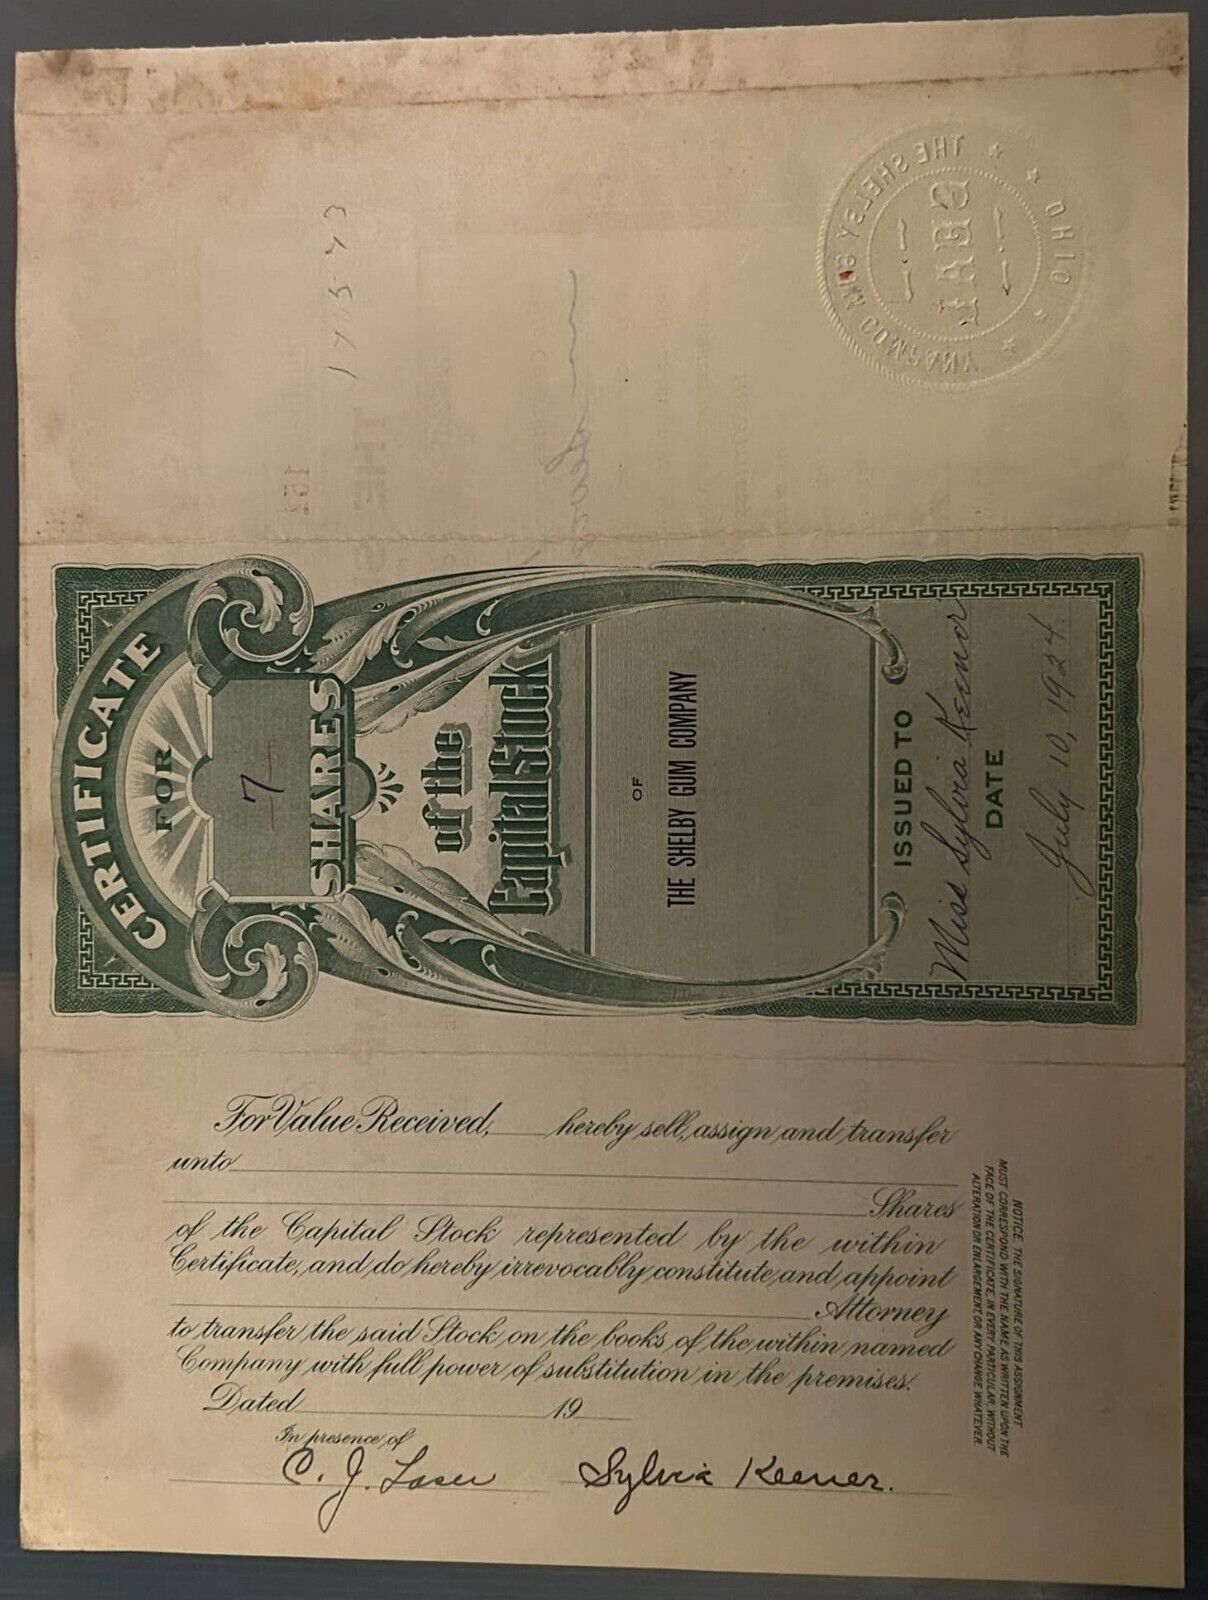 Shelby Gum Company 1924 Stock Certificate, Letterhead, Checks